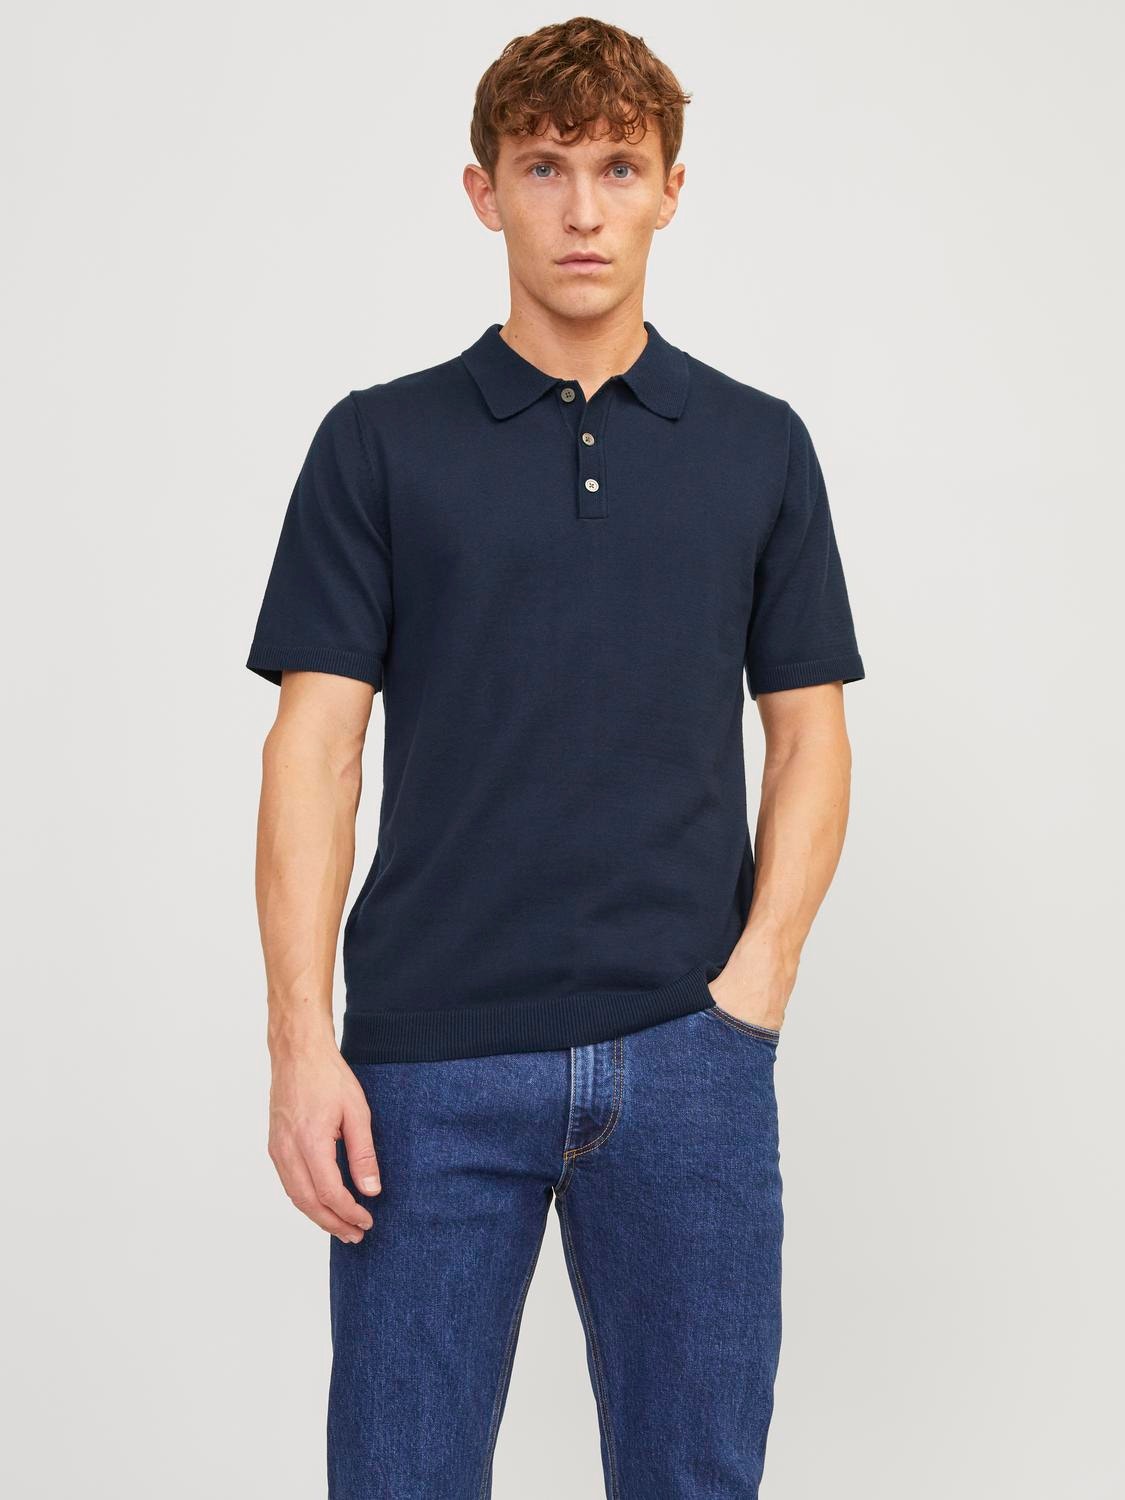 Jack & Jones Vanlig T-skjorte -Navy Blazer - 12254573